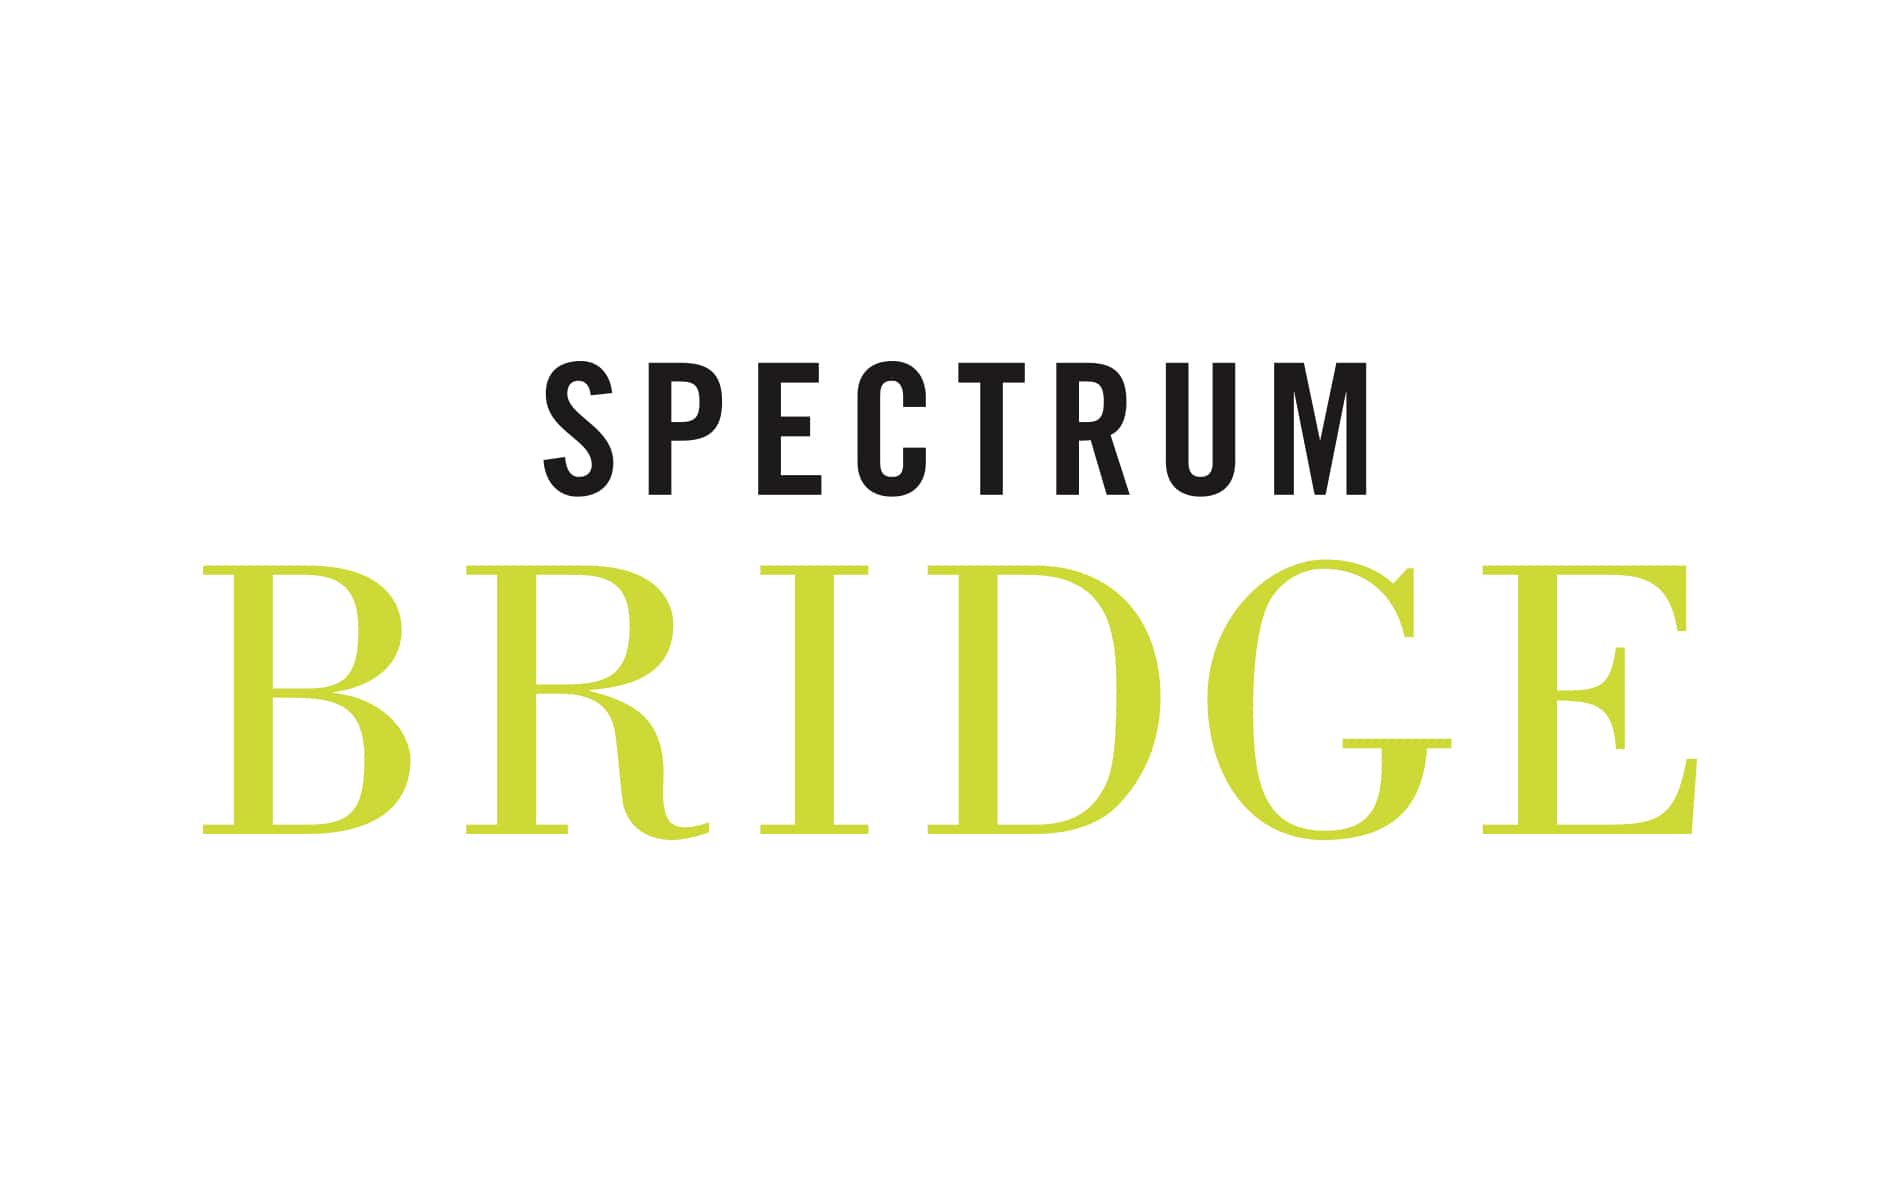 Spectrum Bridge, VIE Magazine, January 2018